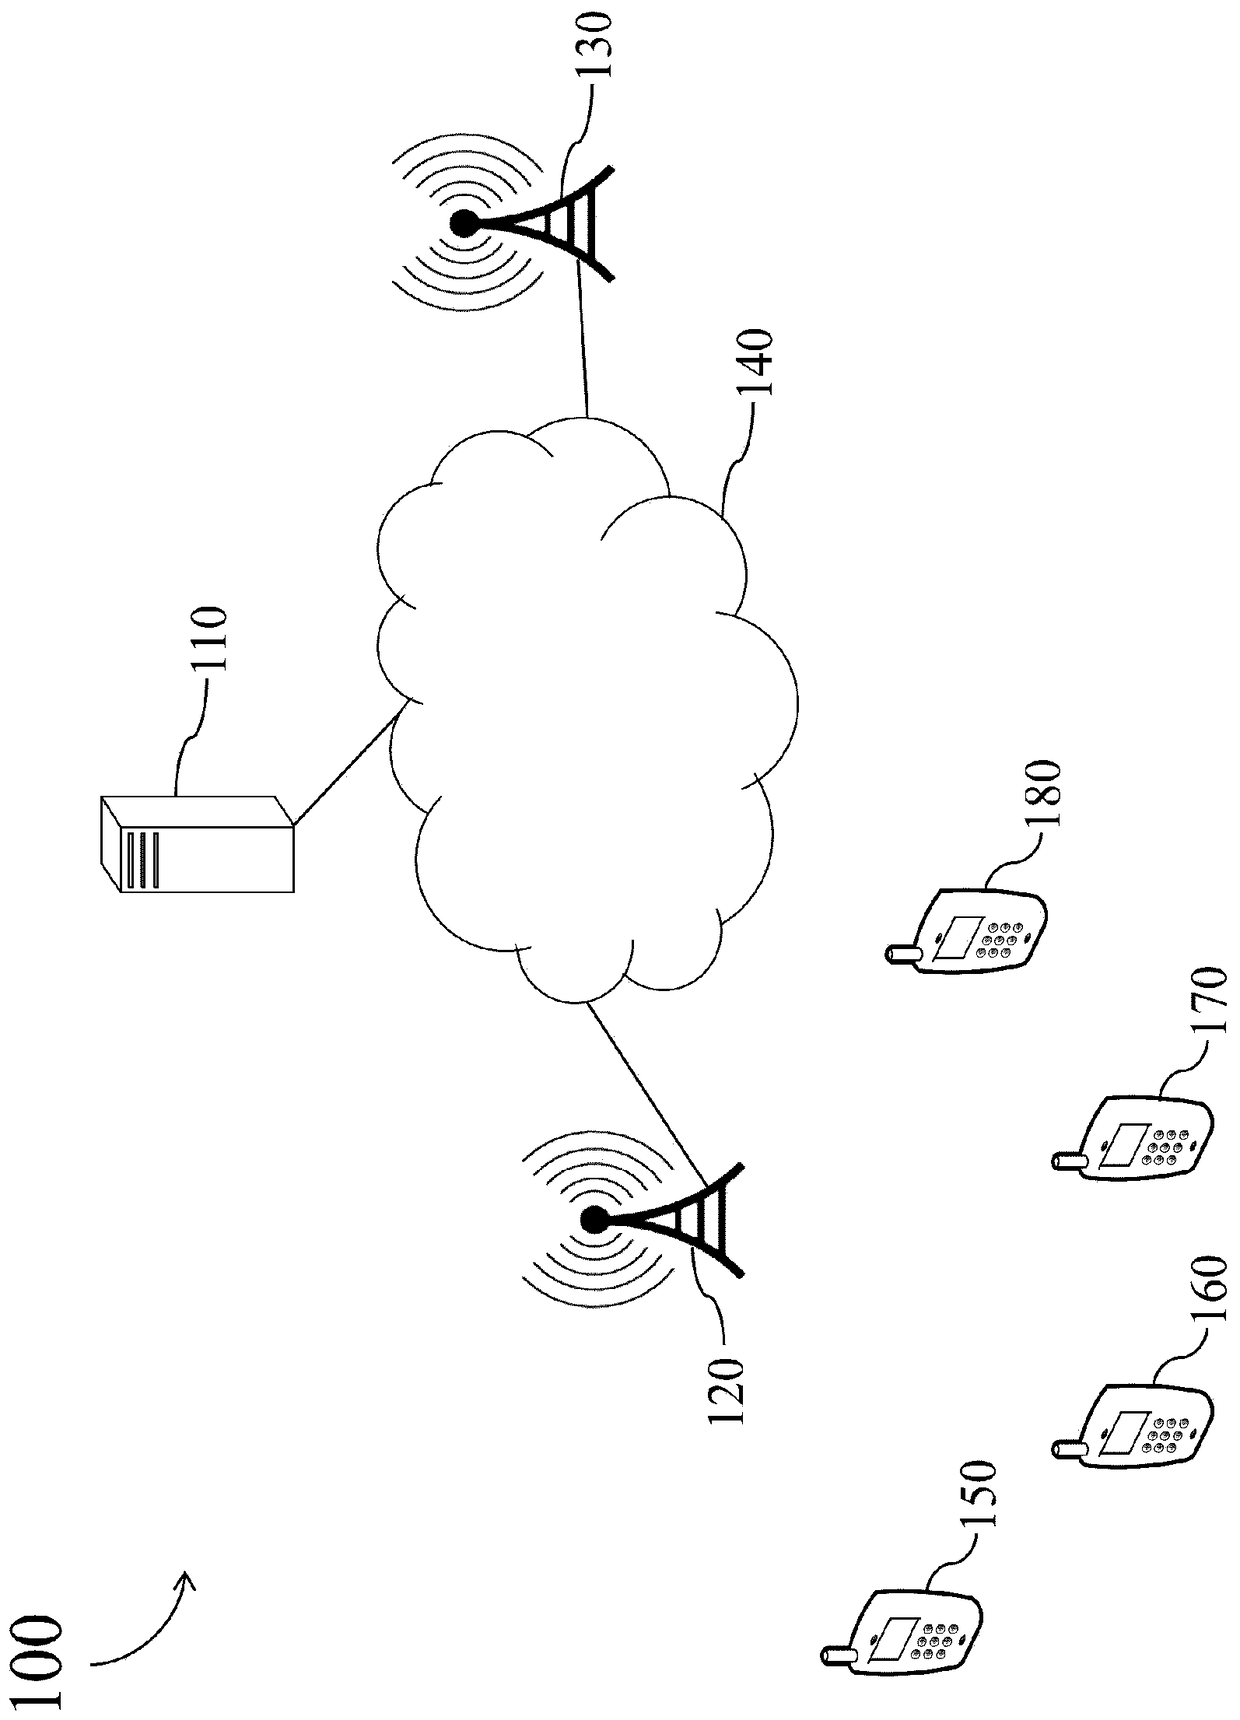 Communication method with dynamic wireless dormancy mechanism